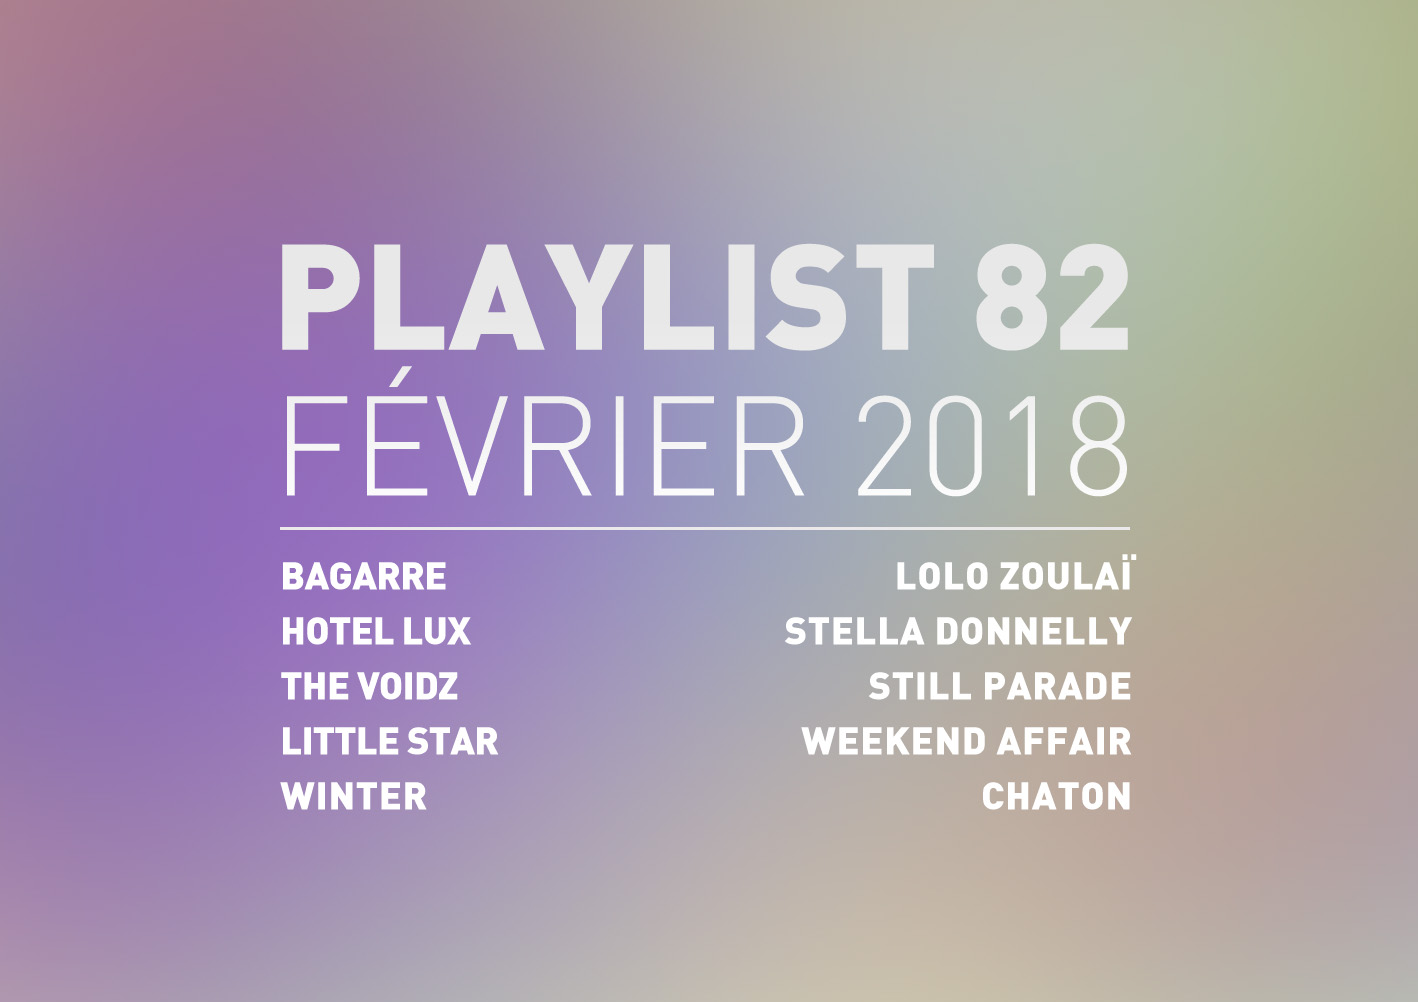 Playlist #82 : Hotel Lux, The Voidz, Lolo Zouaï, Stella Donnelly, etc